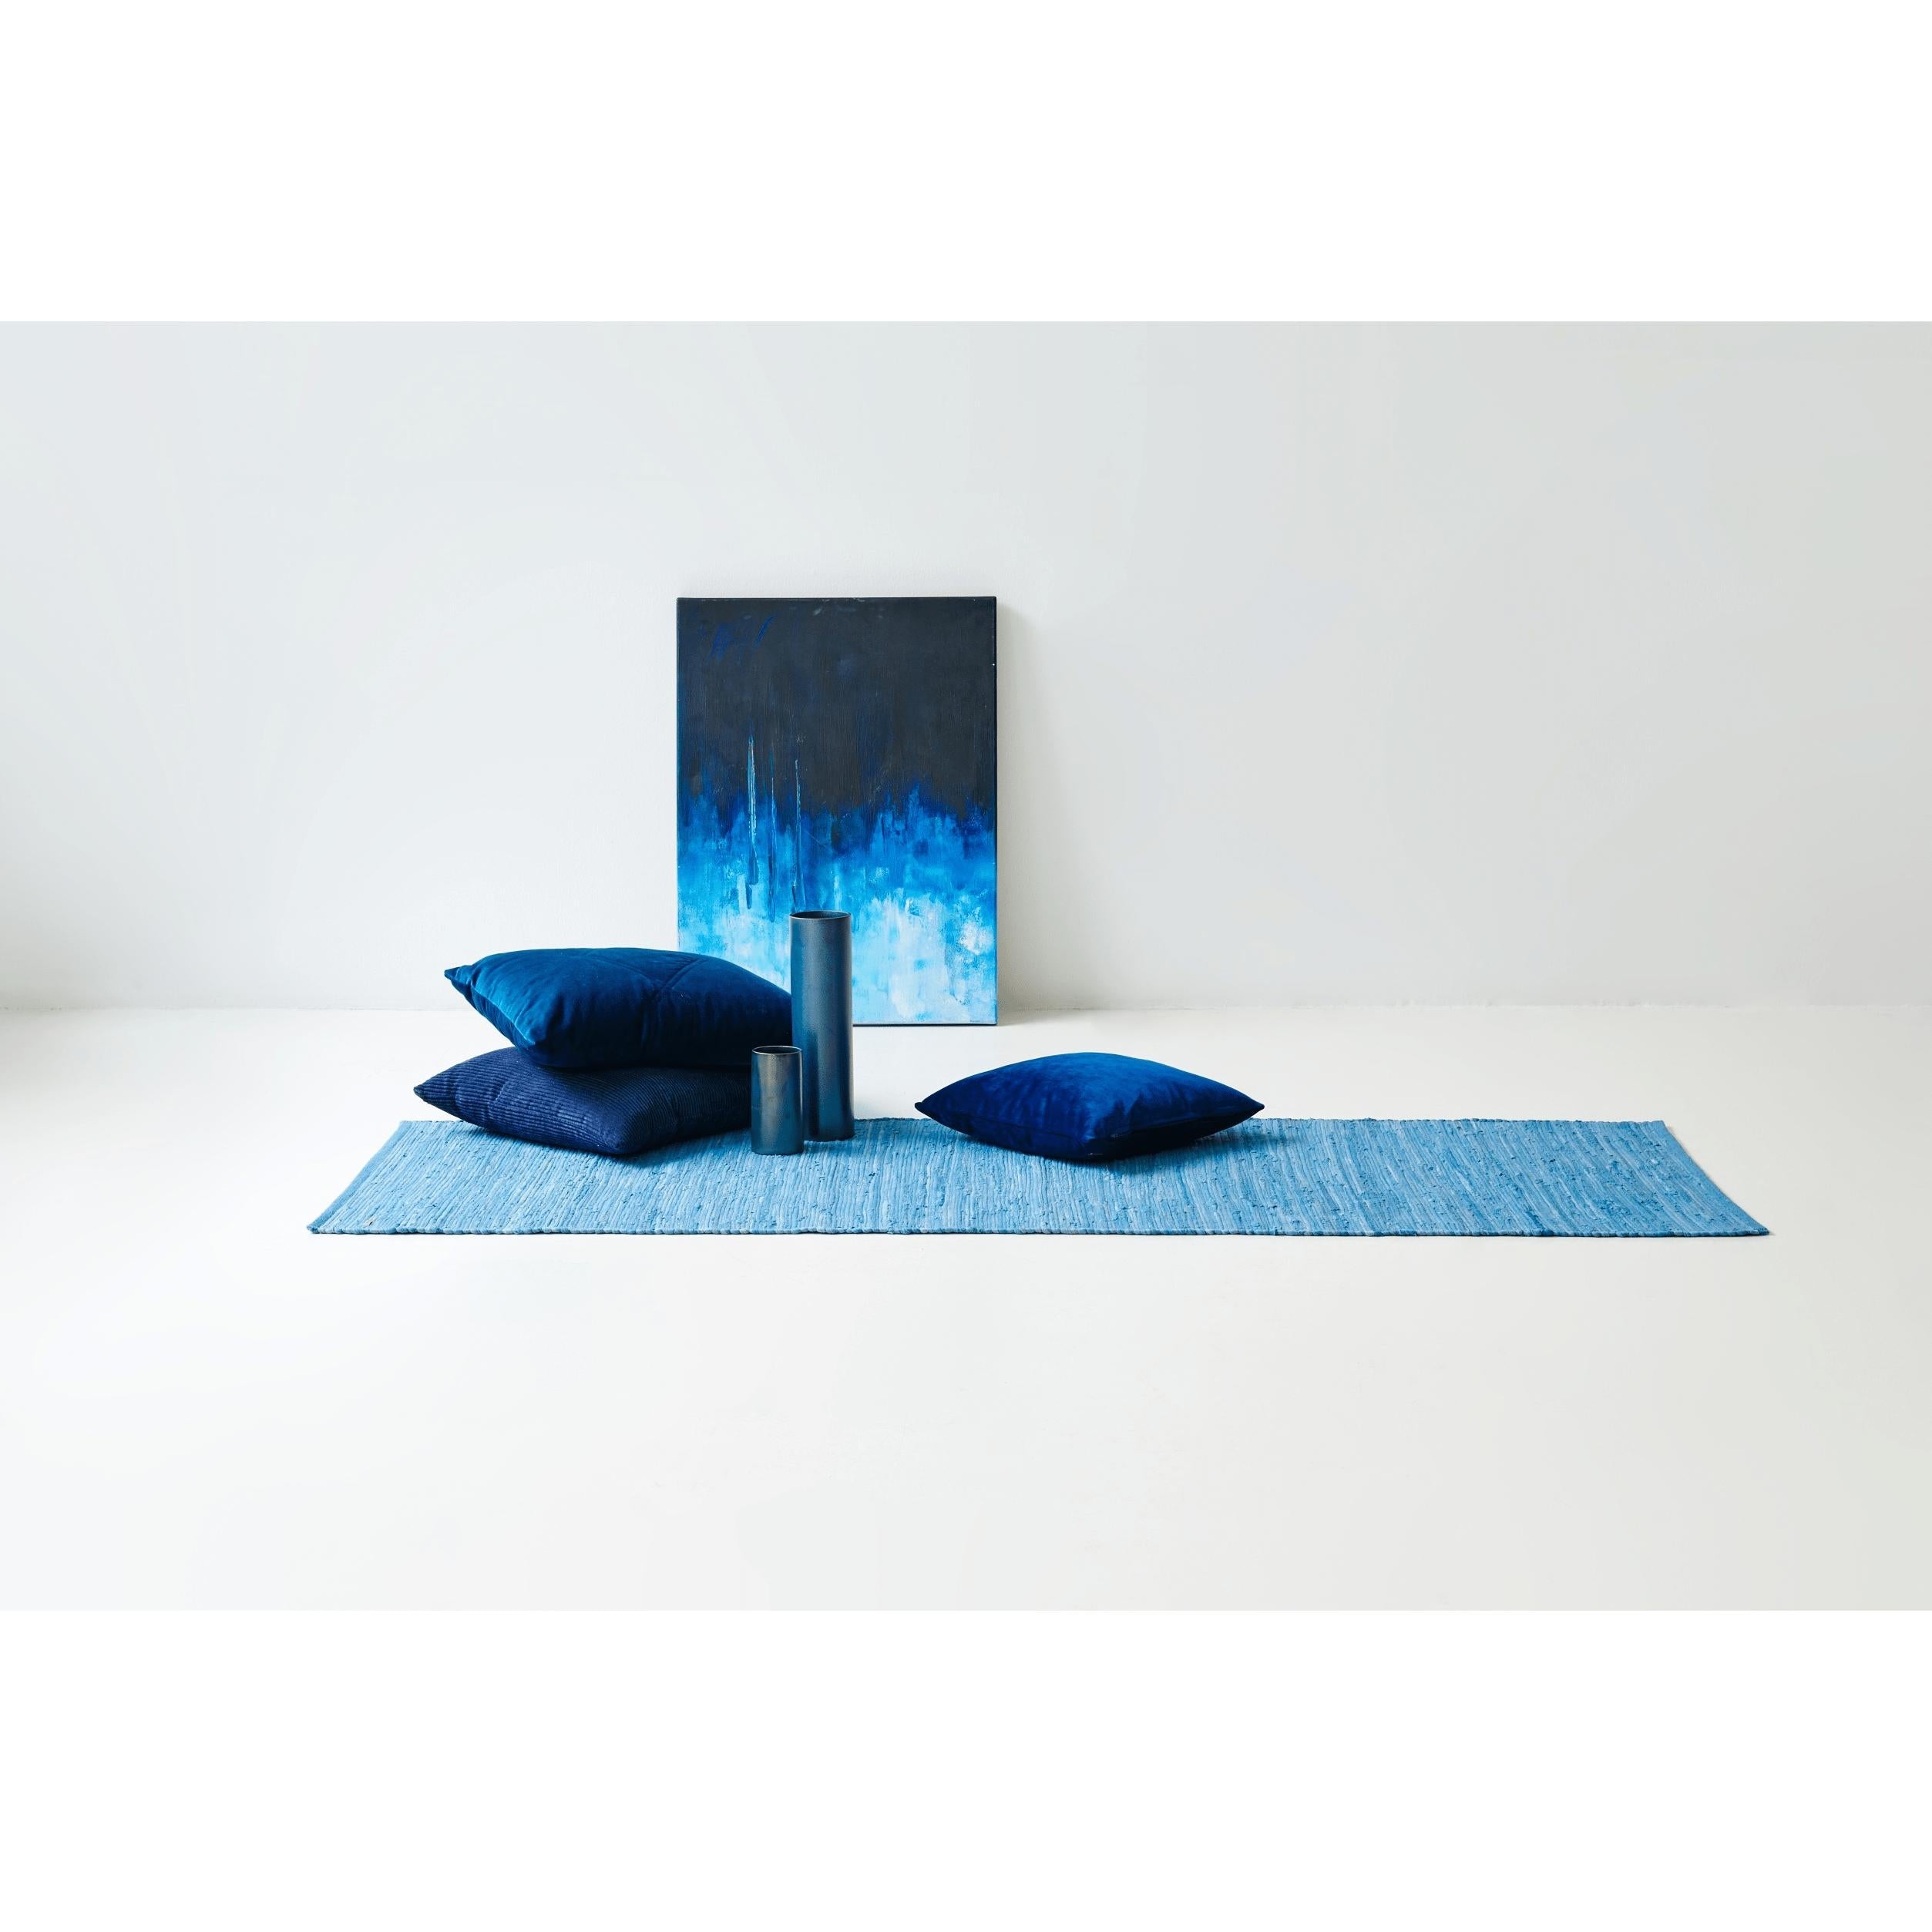 Rug Solid Cotton Tæppe Eternity Blue, 65 x 135 cm